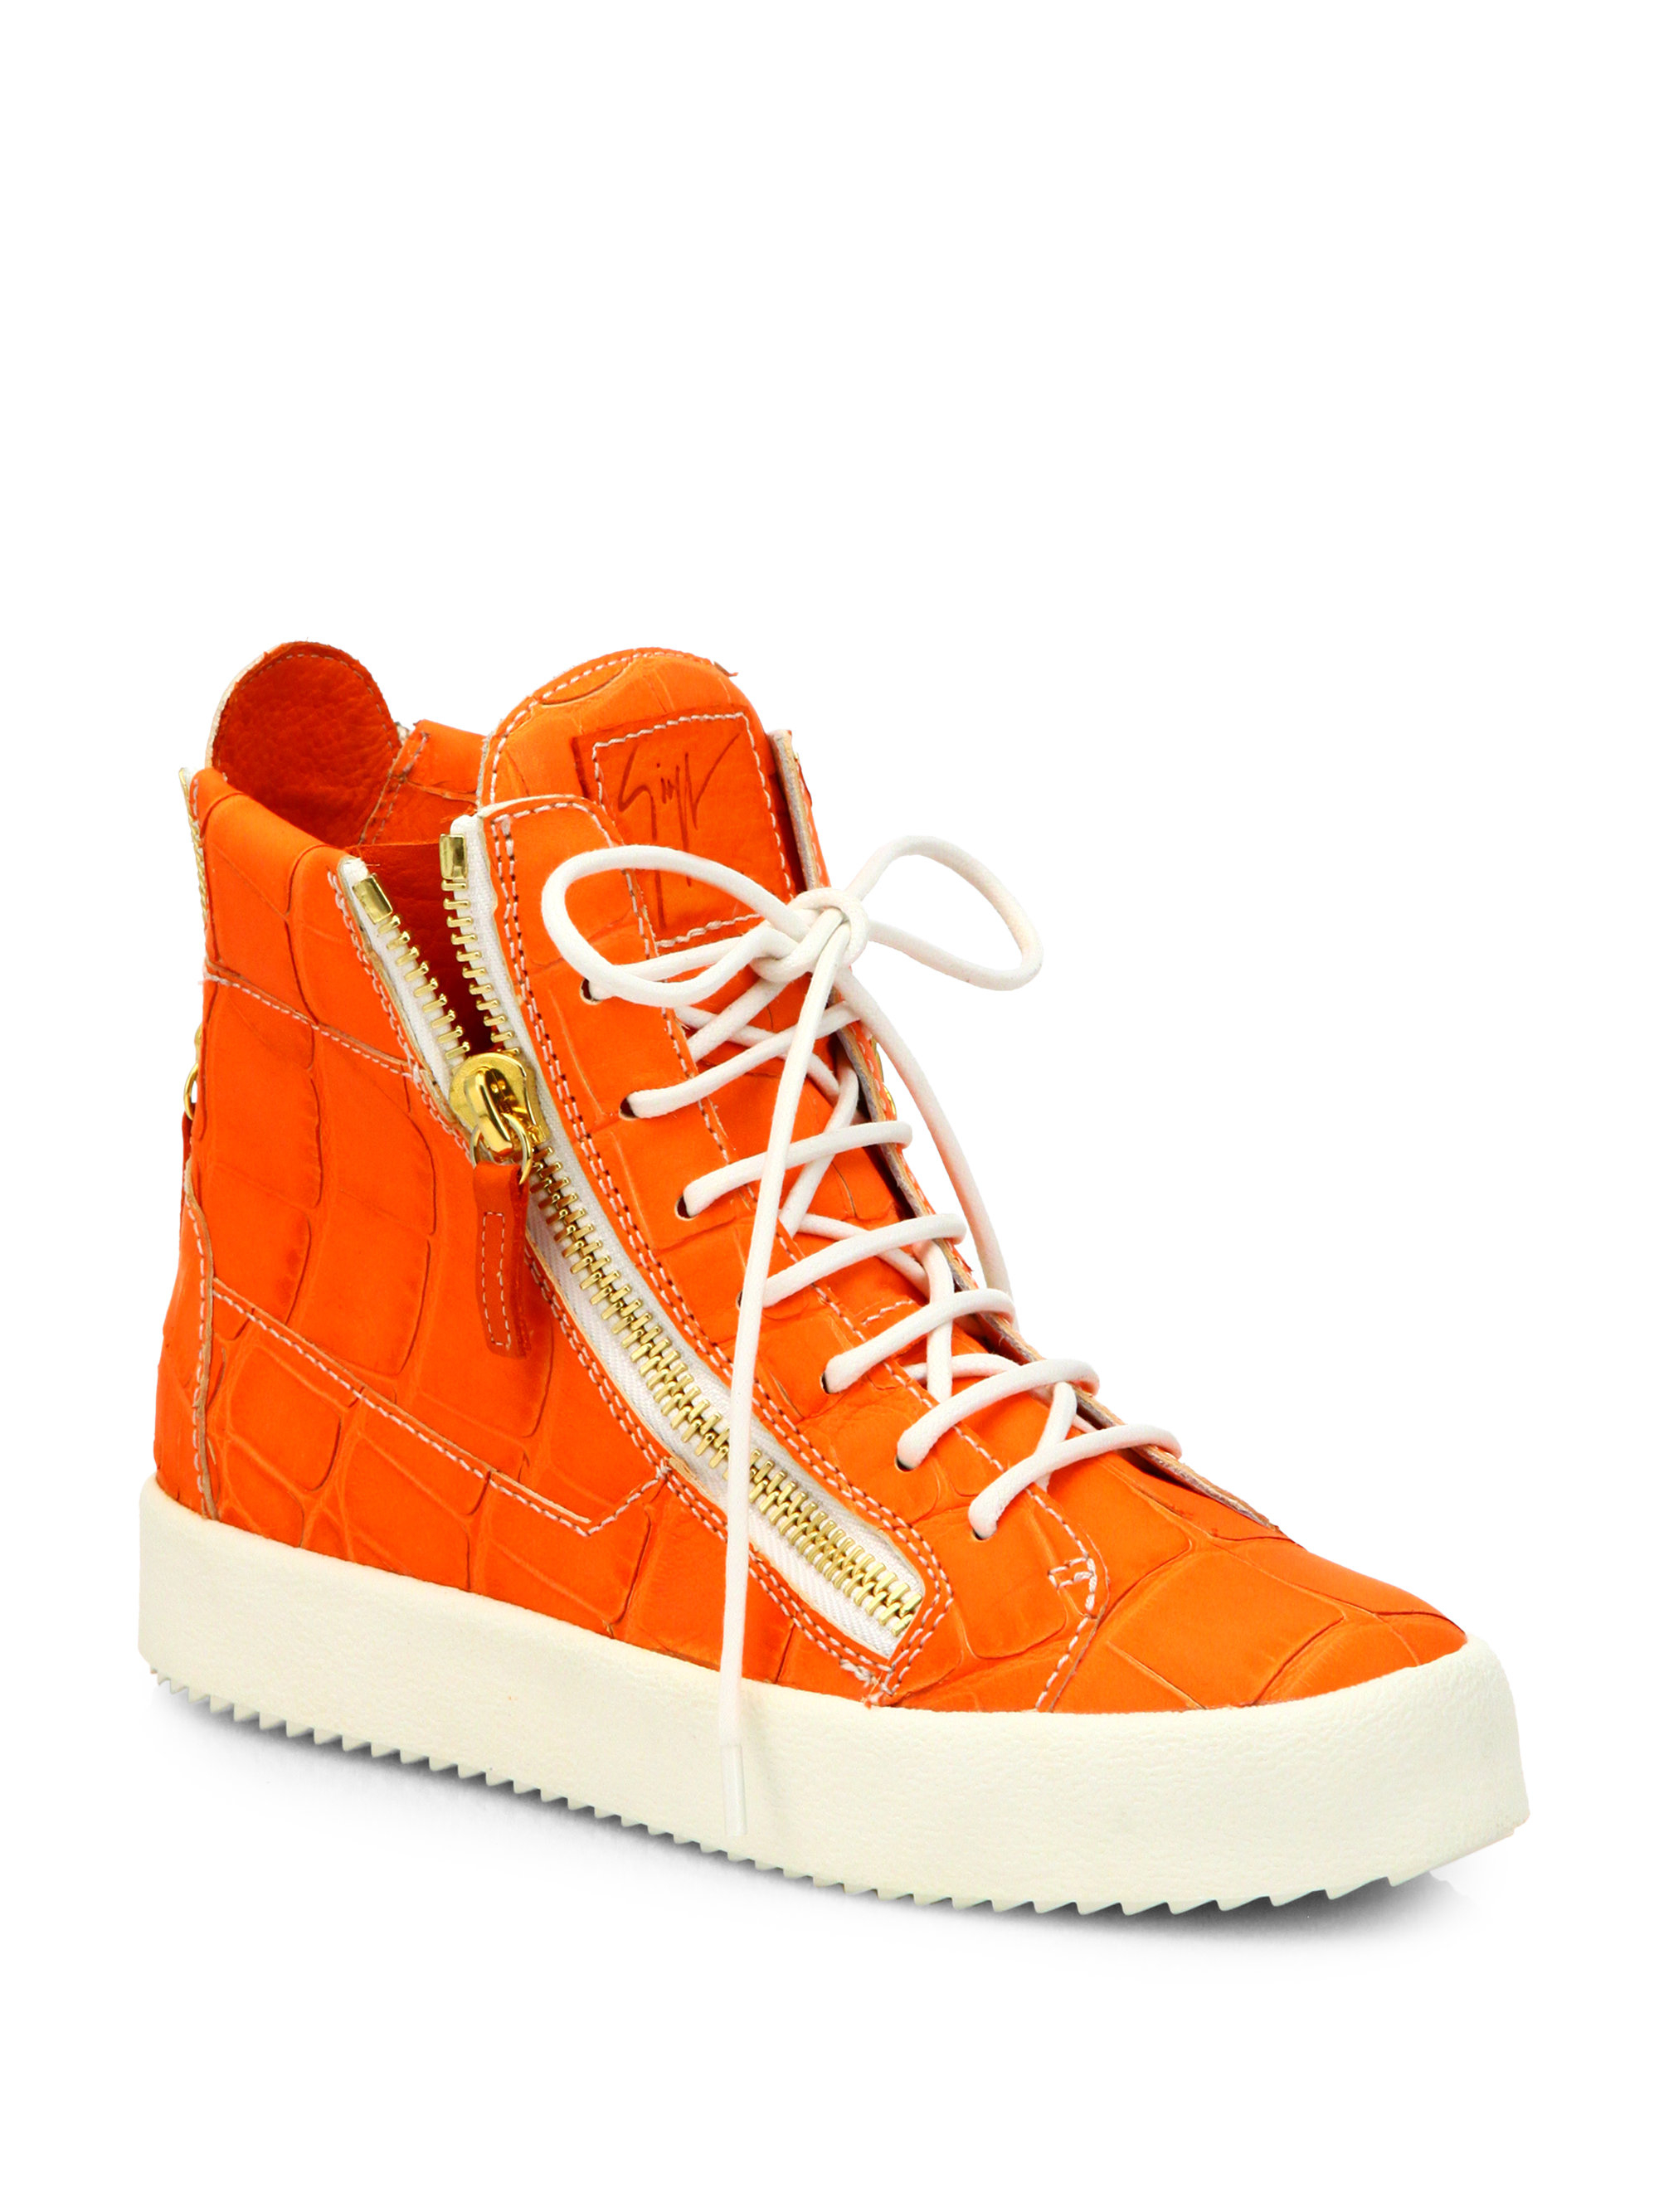 Giuseppe Zanotti Croc-print Leather High-top Sneakers in Orange for Men ...